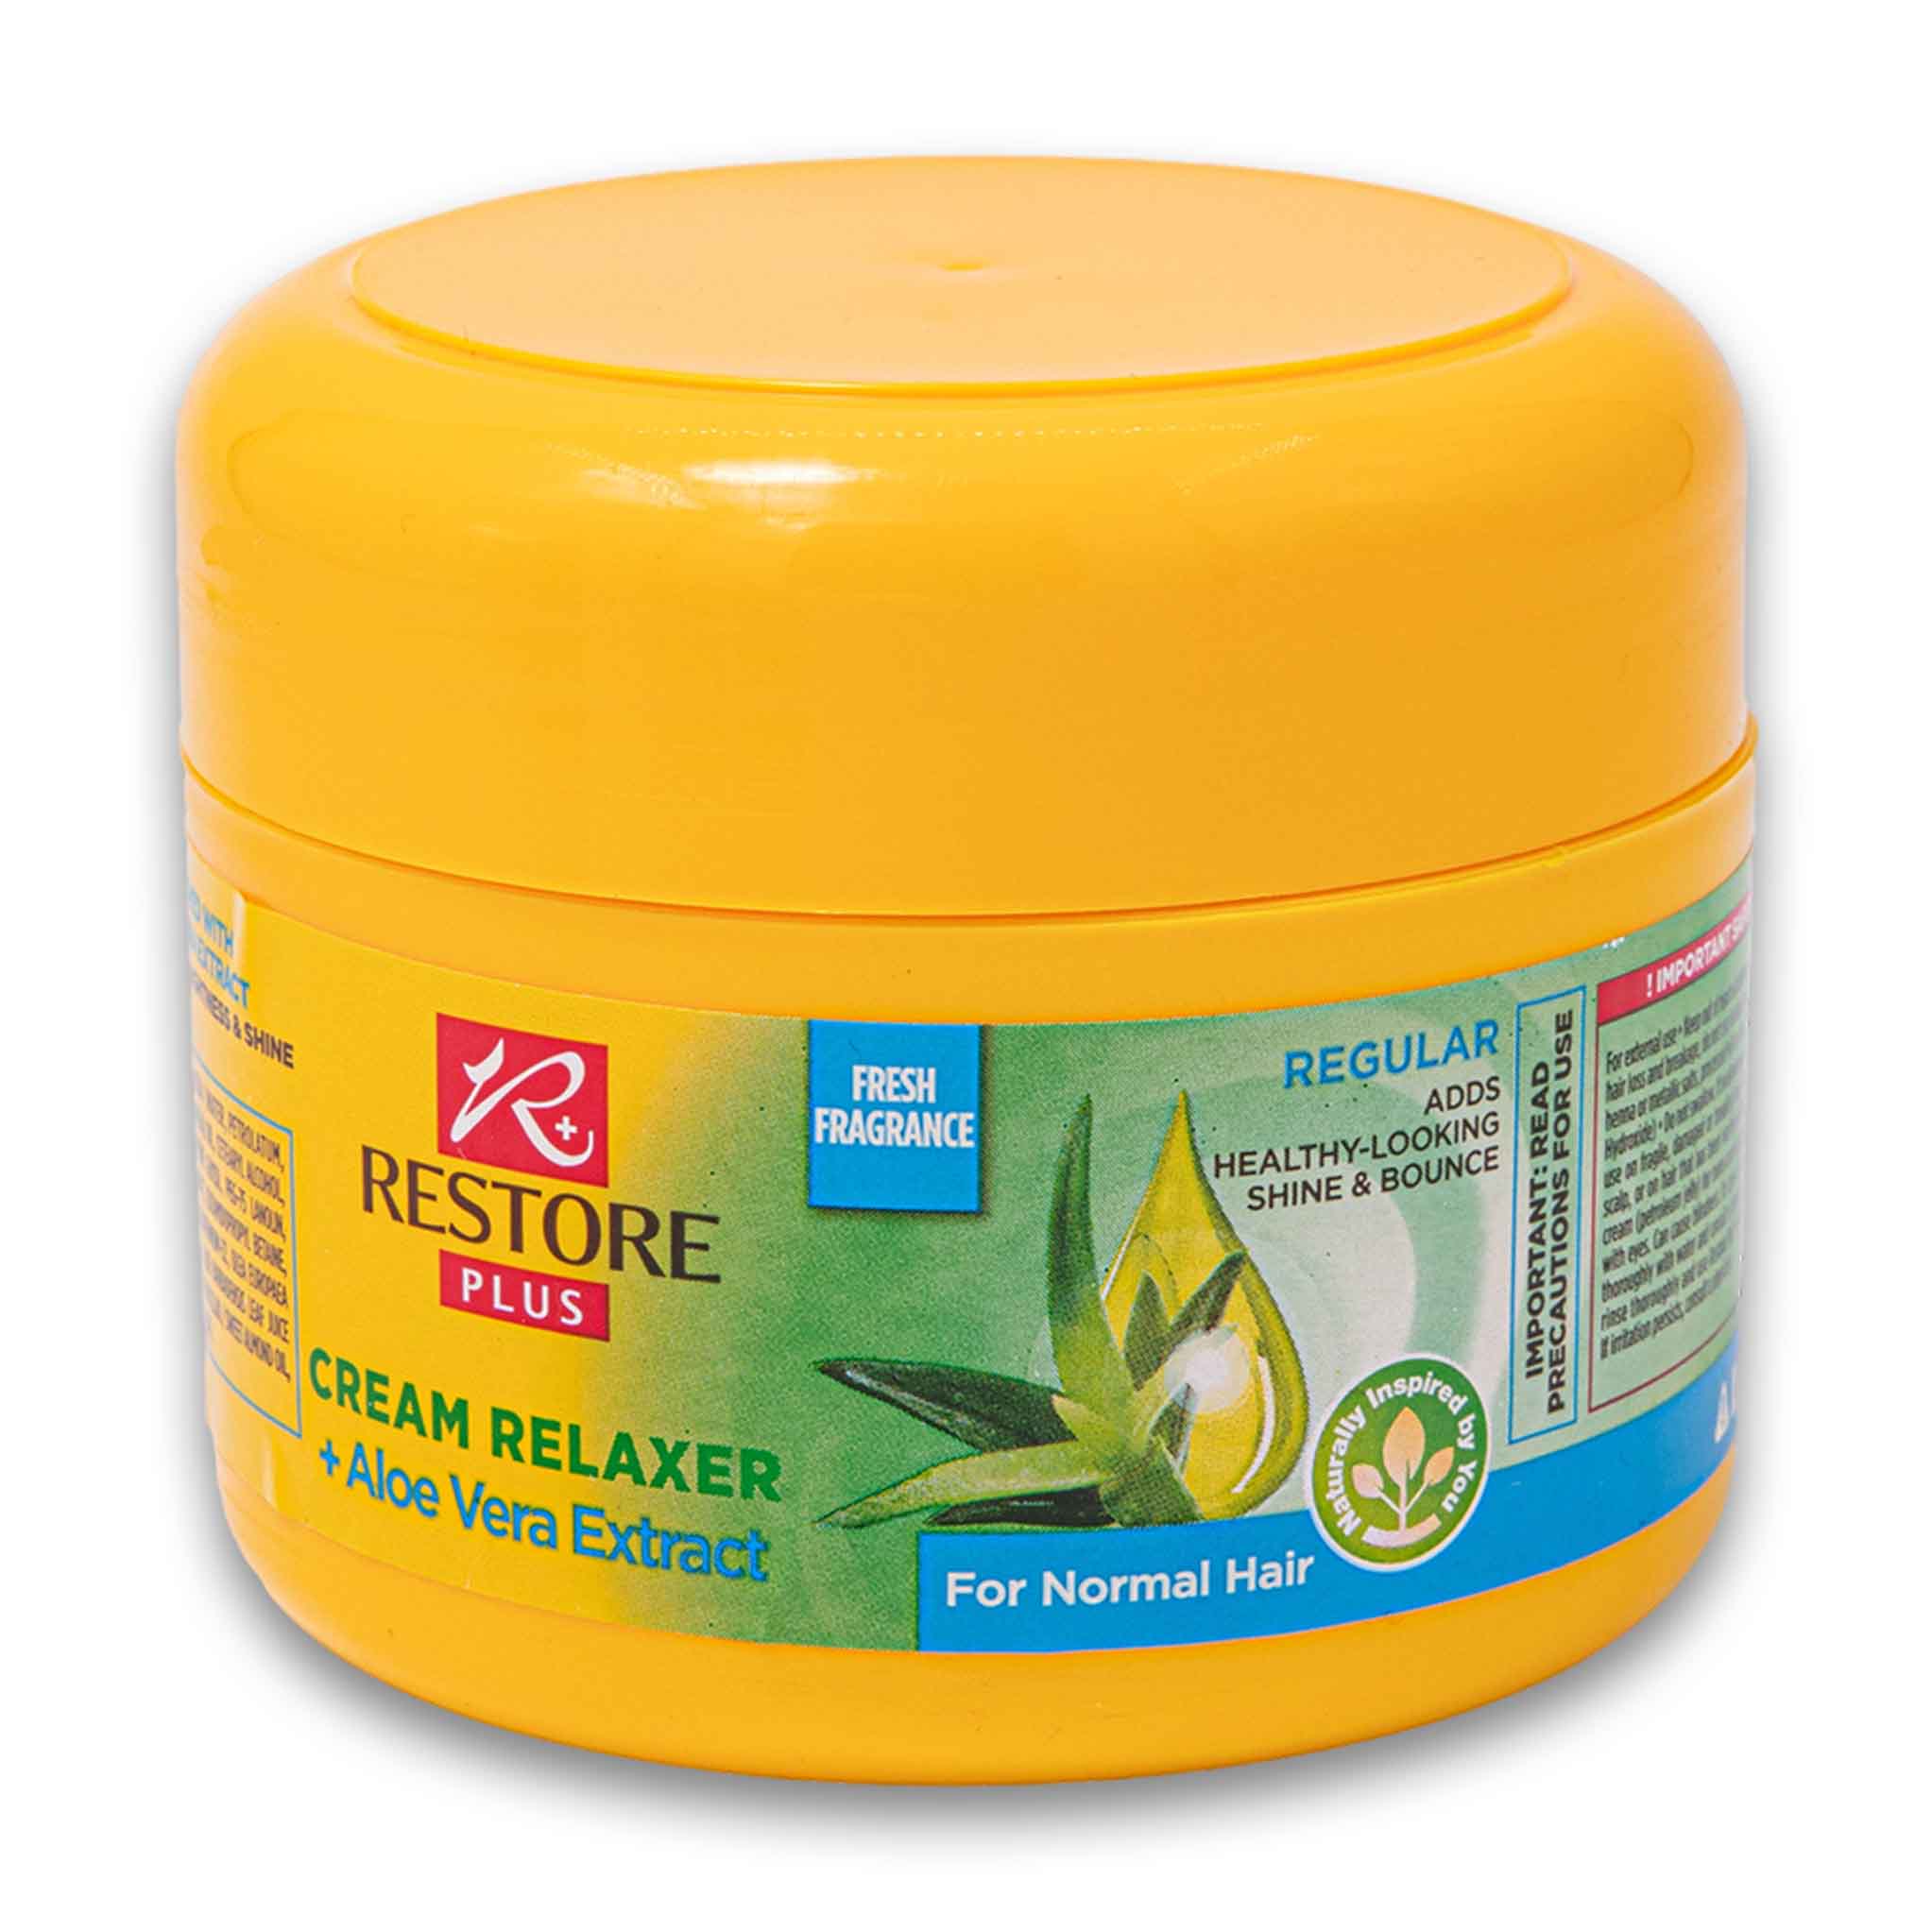 Restore Plus Cream Relaxer +Aloe Extract Regular 125ml for Normal Hair